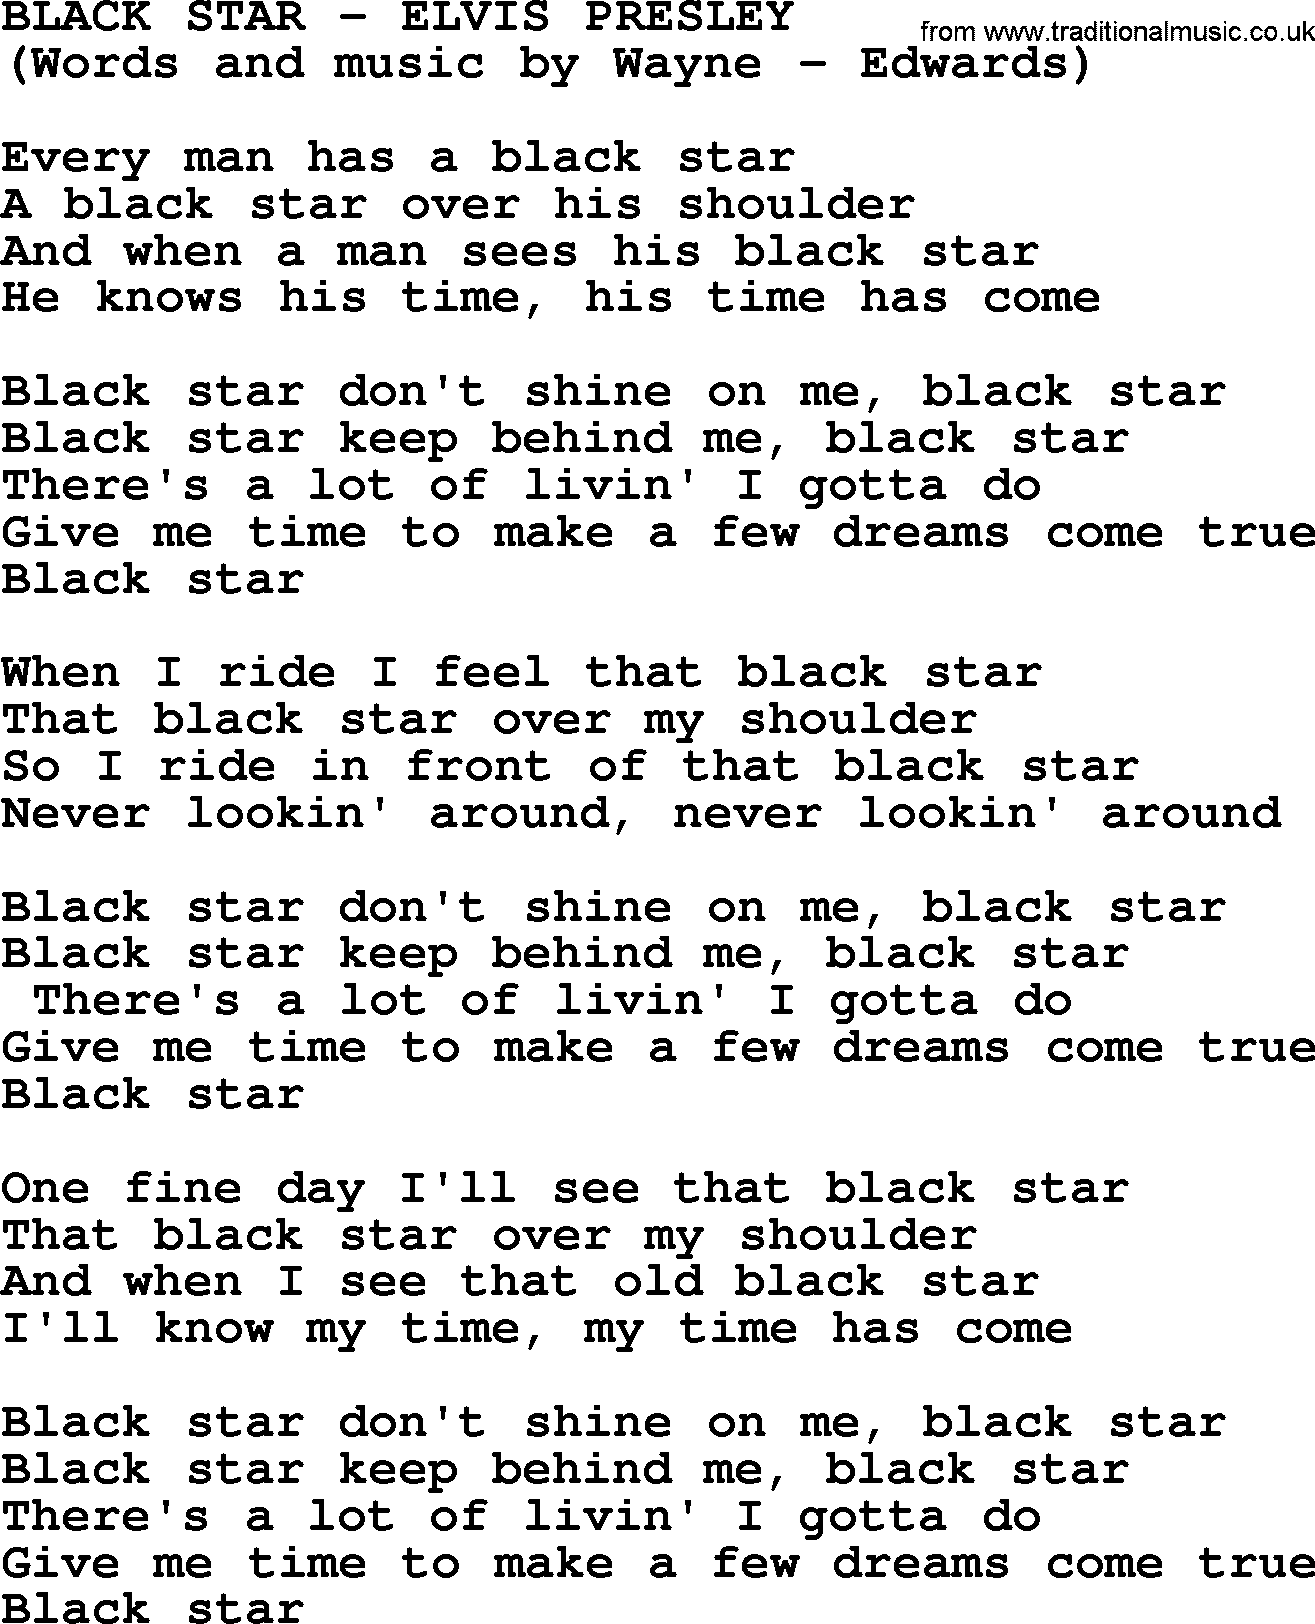 Elvis Presley song: Black Star lyrics